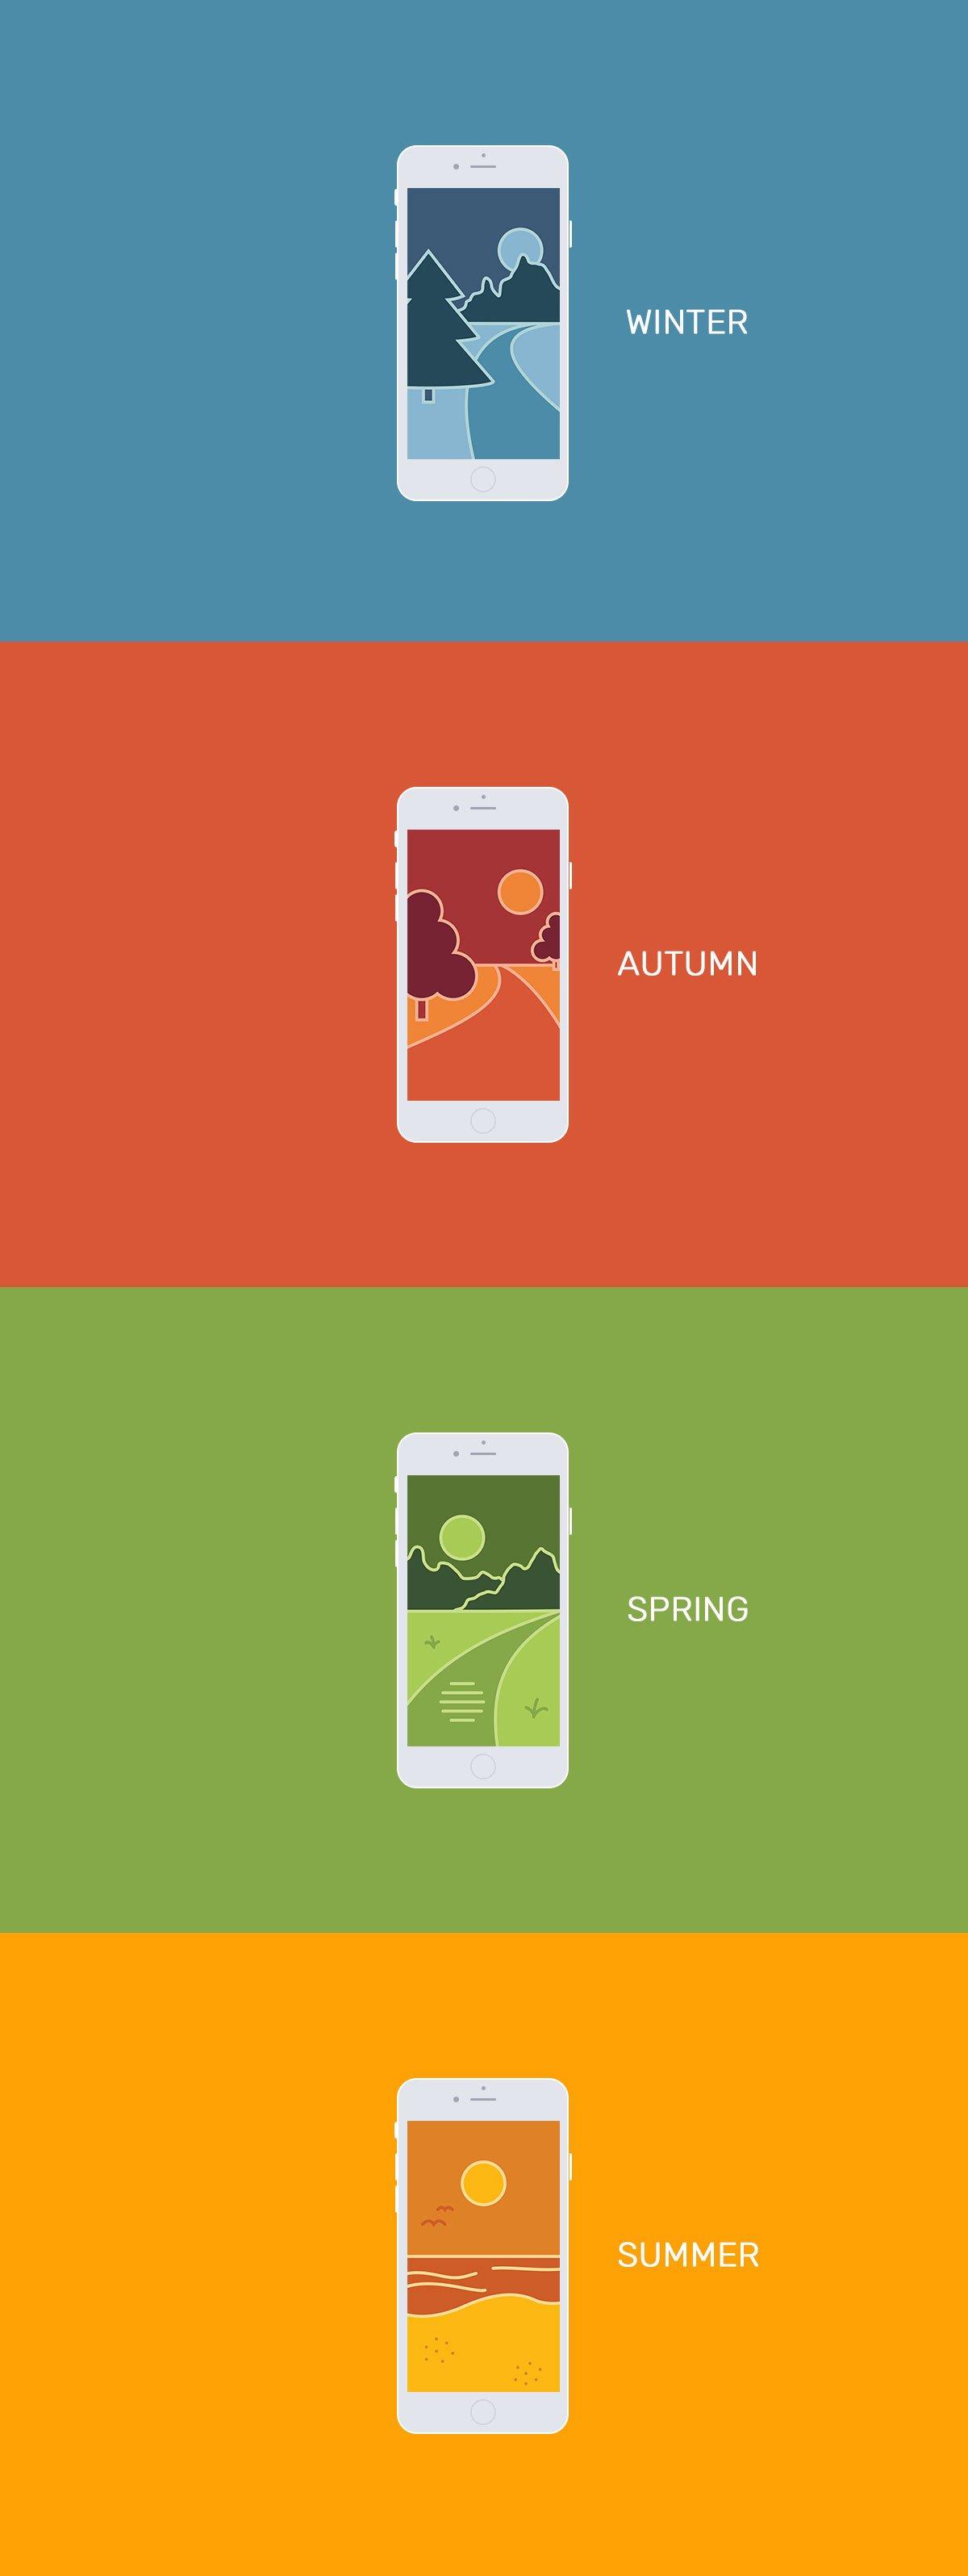 Free iPhone Seasons Wallpaper Pack